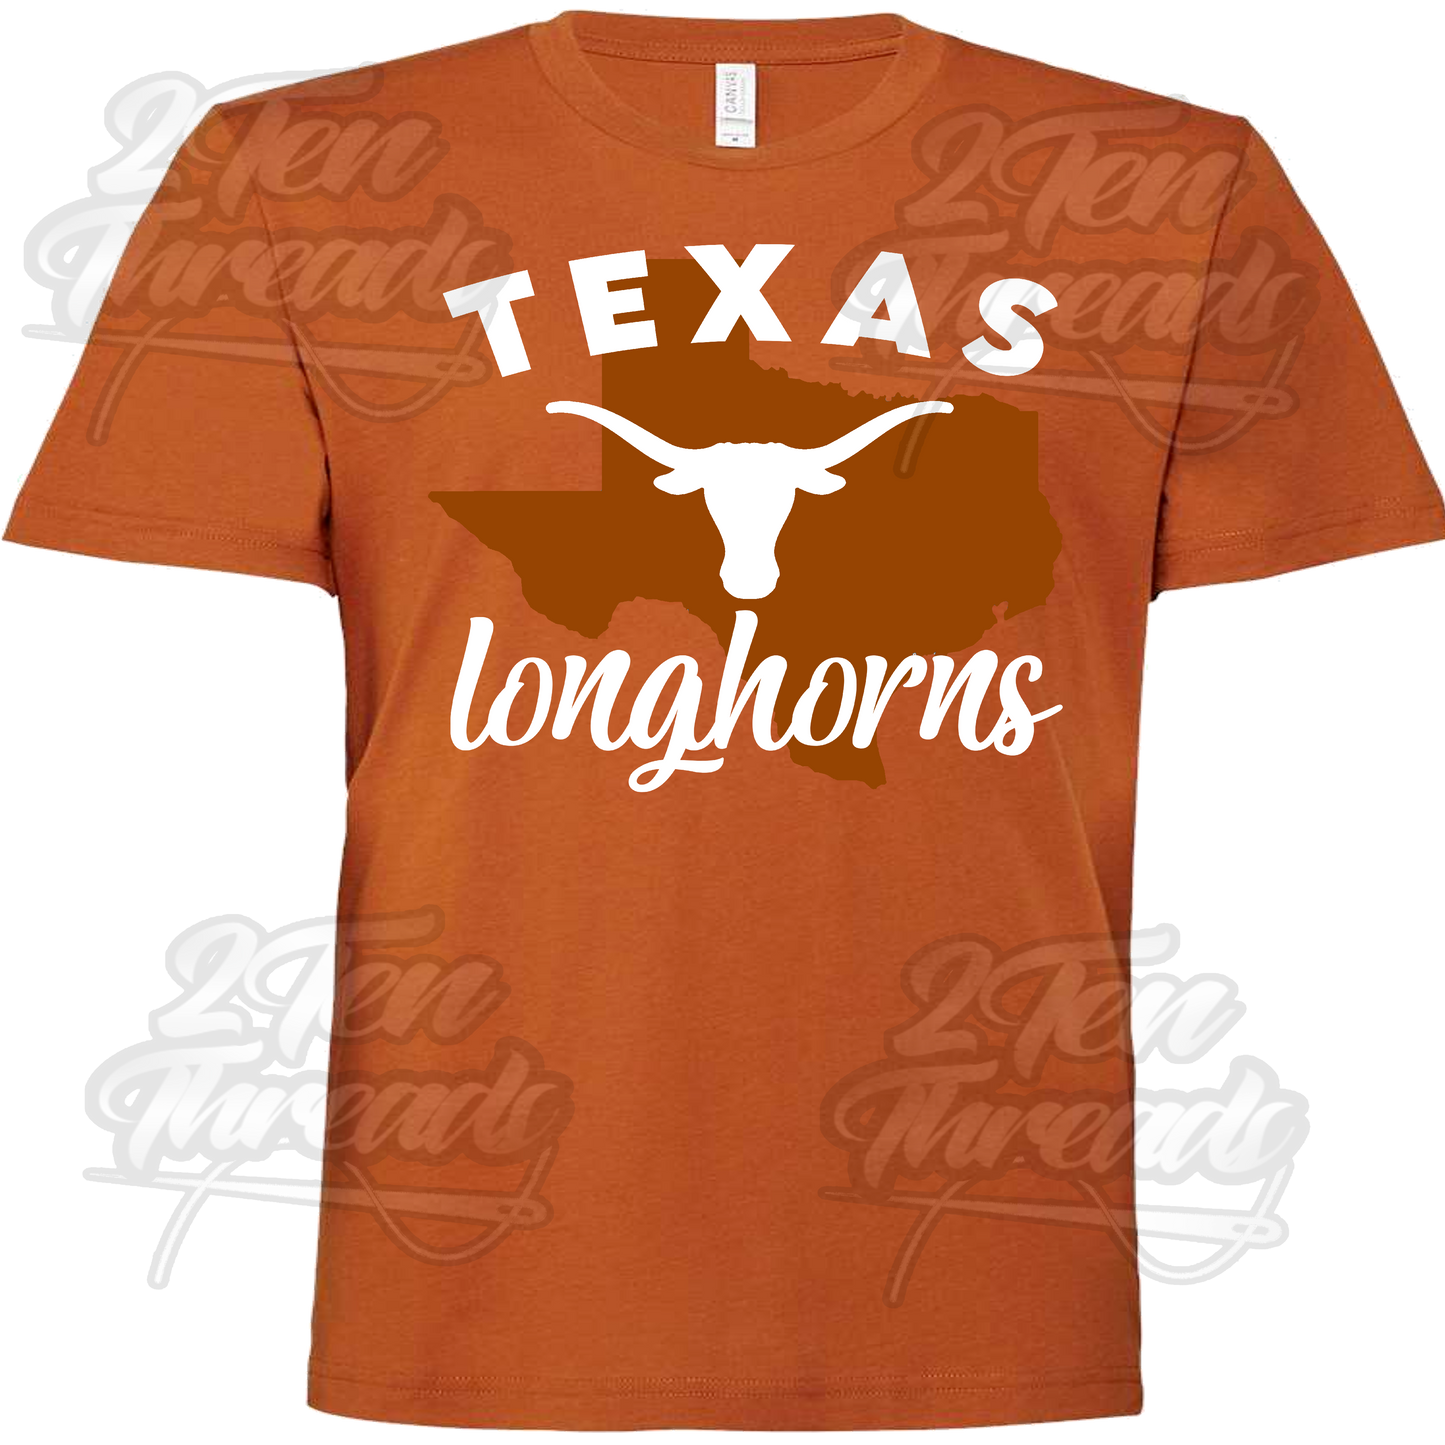 Classic Texas Shirt